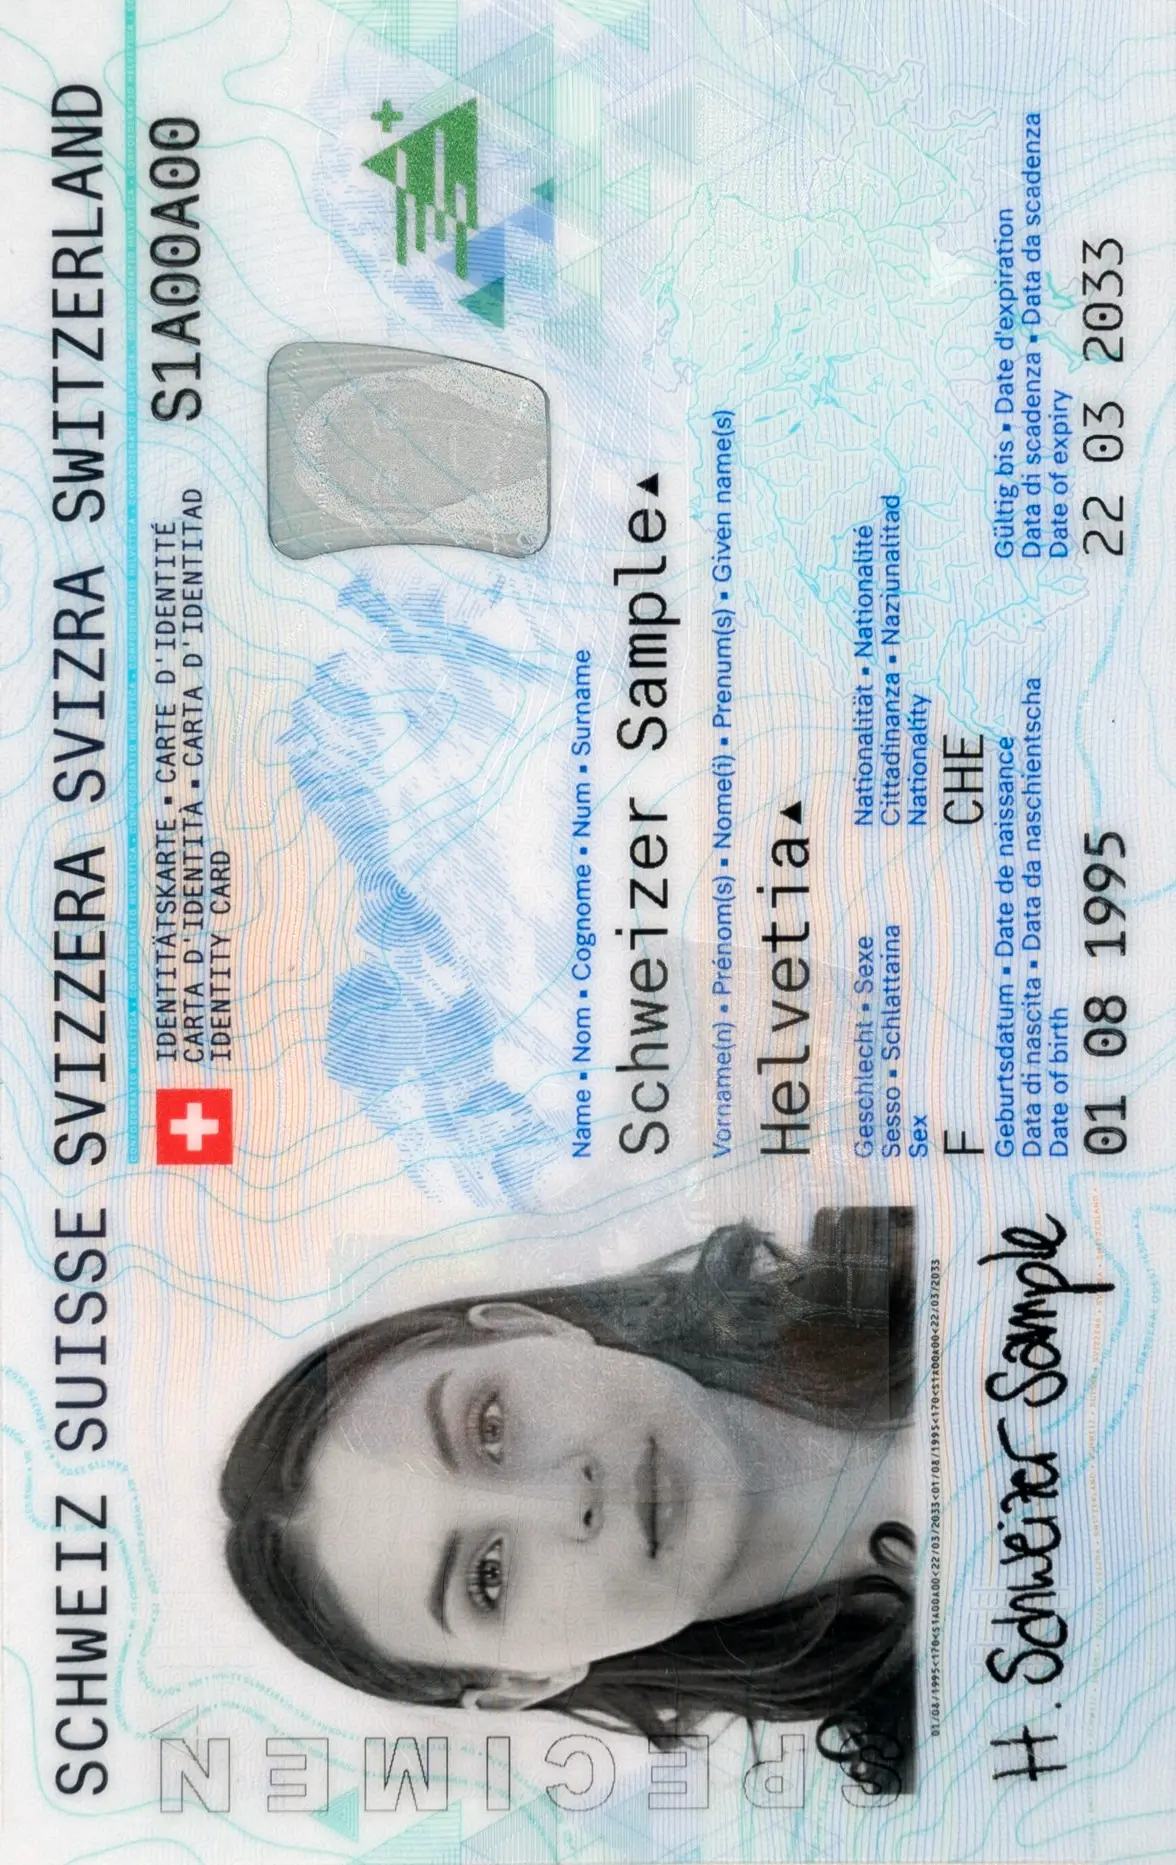 Fototessera per la carta d'identità svizzera